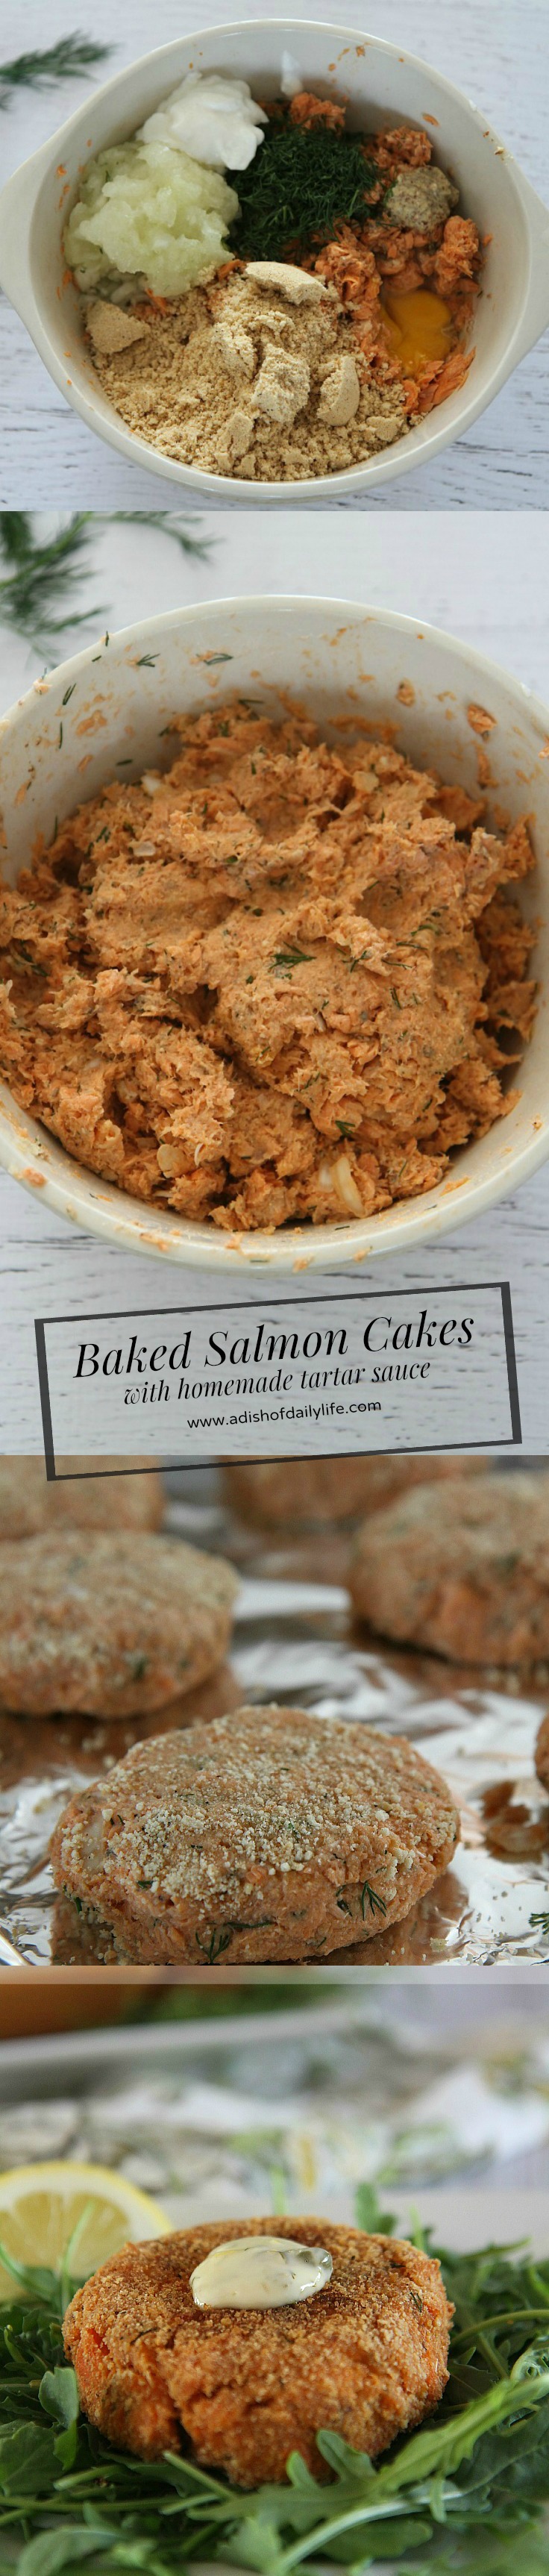 Baked Salmon Cakes with Homemade Tartar Sauce